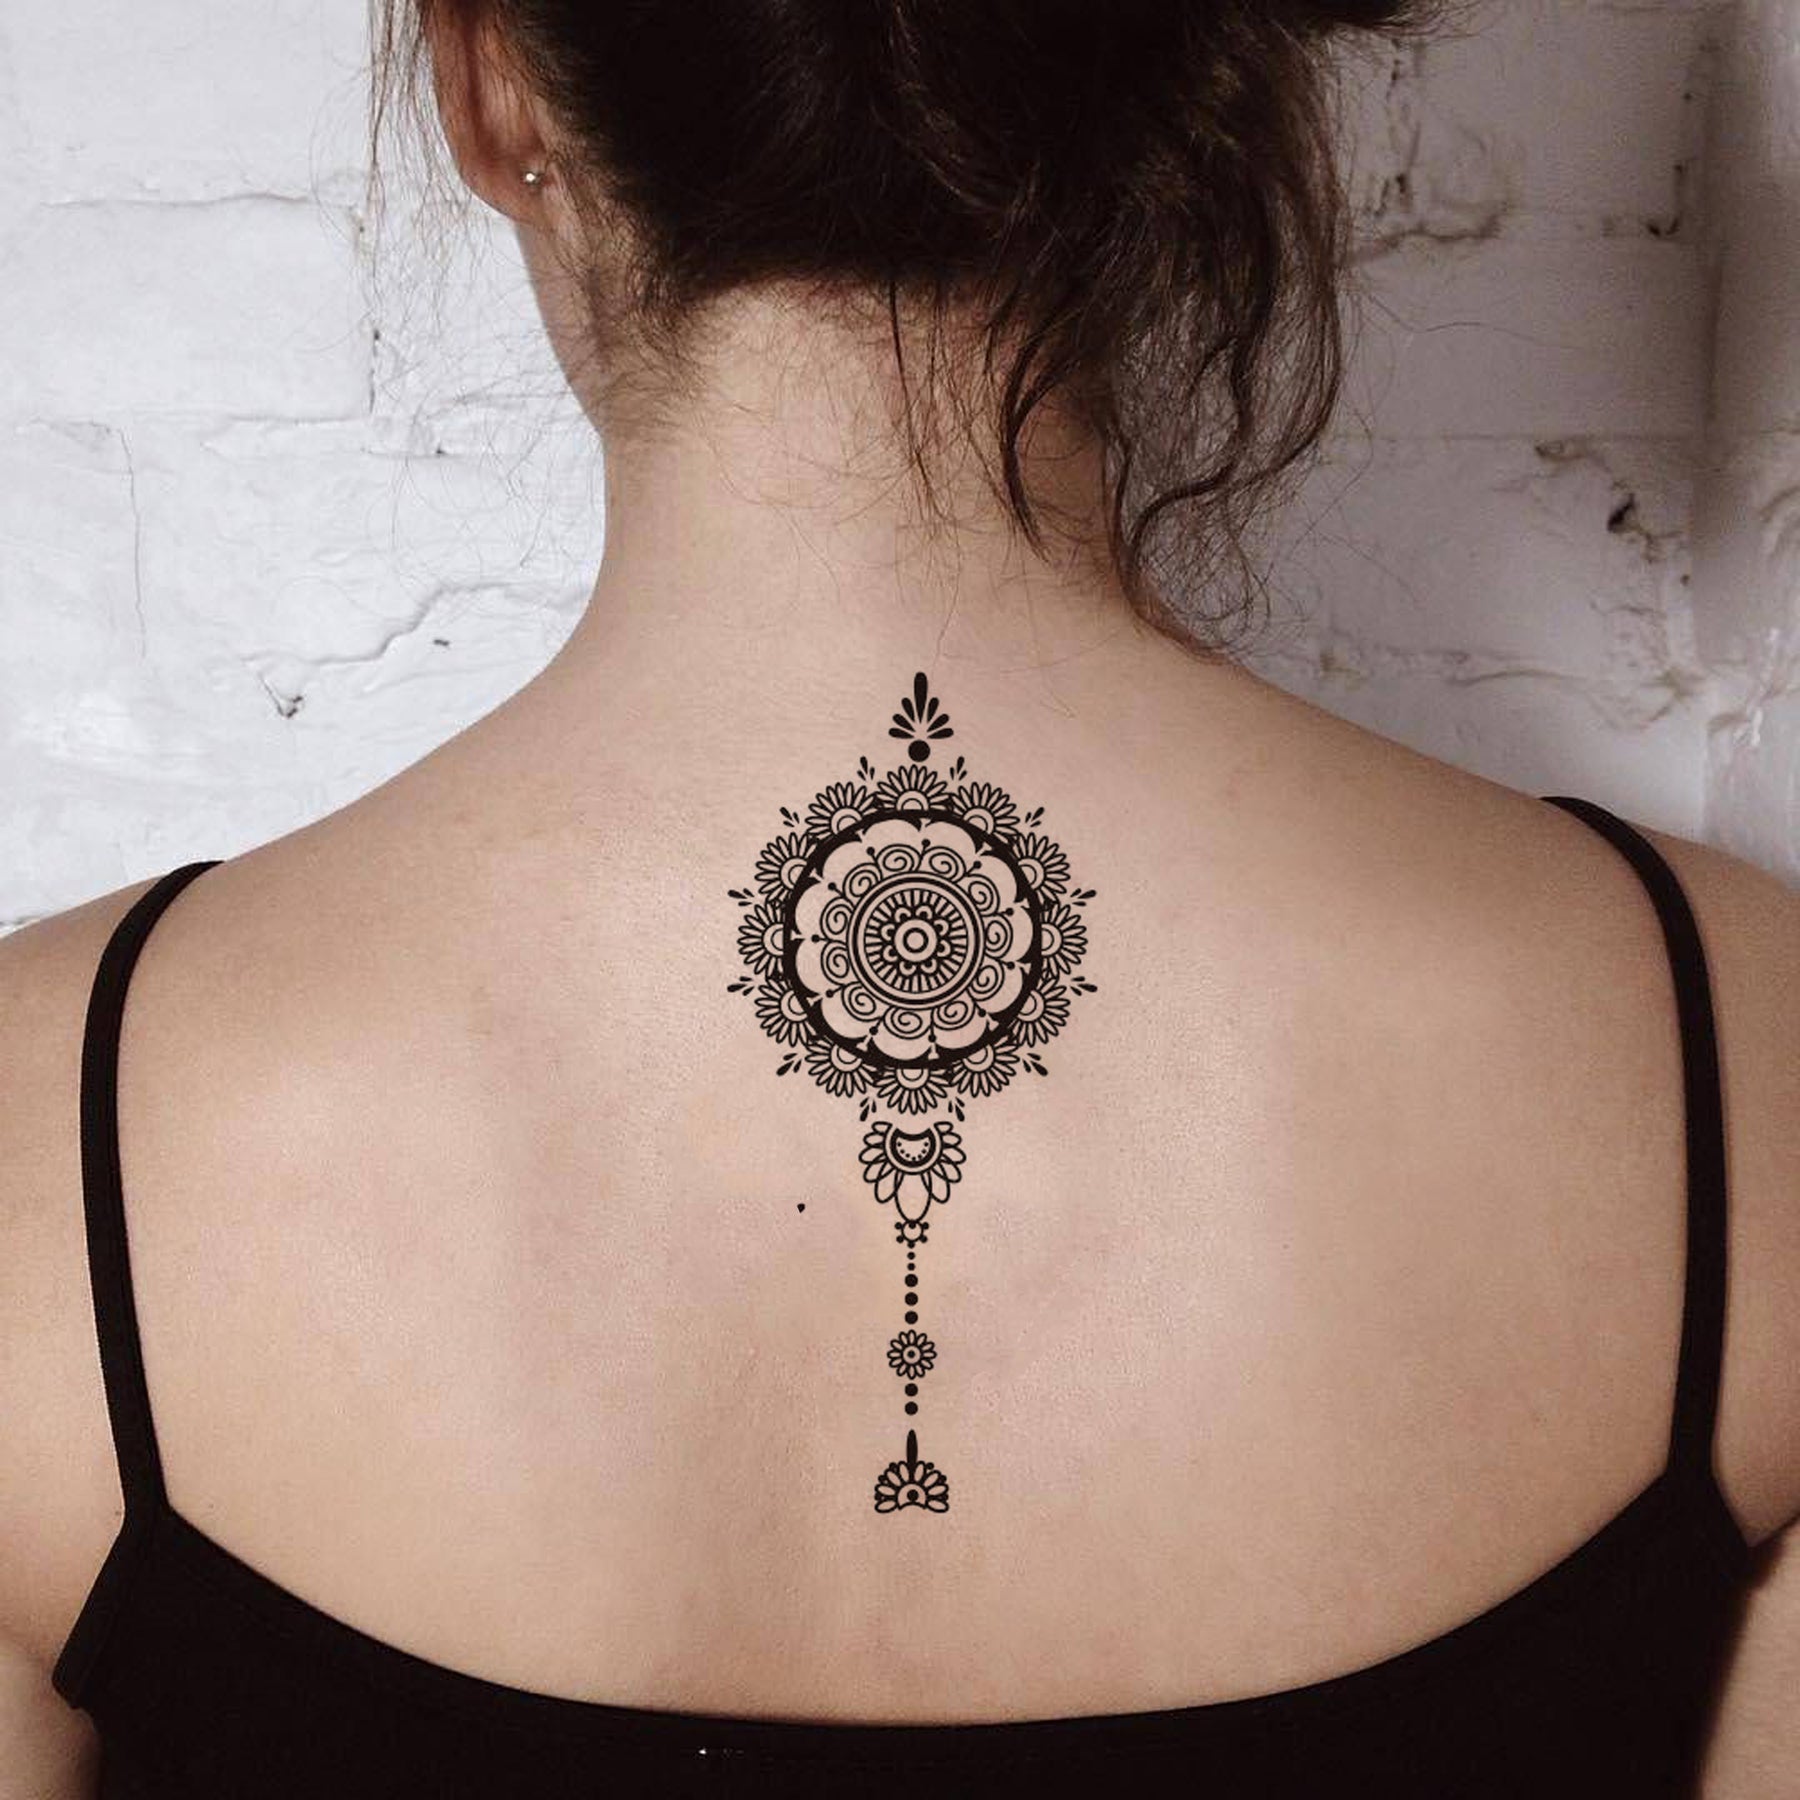 Metallic Temporary Tattoo| Shop Gypsy-Chic Sofia | Flash Tattoos®